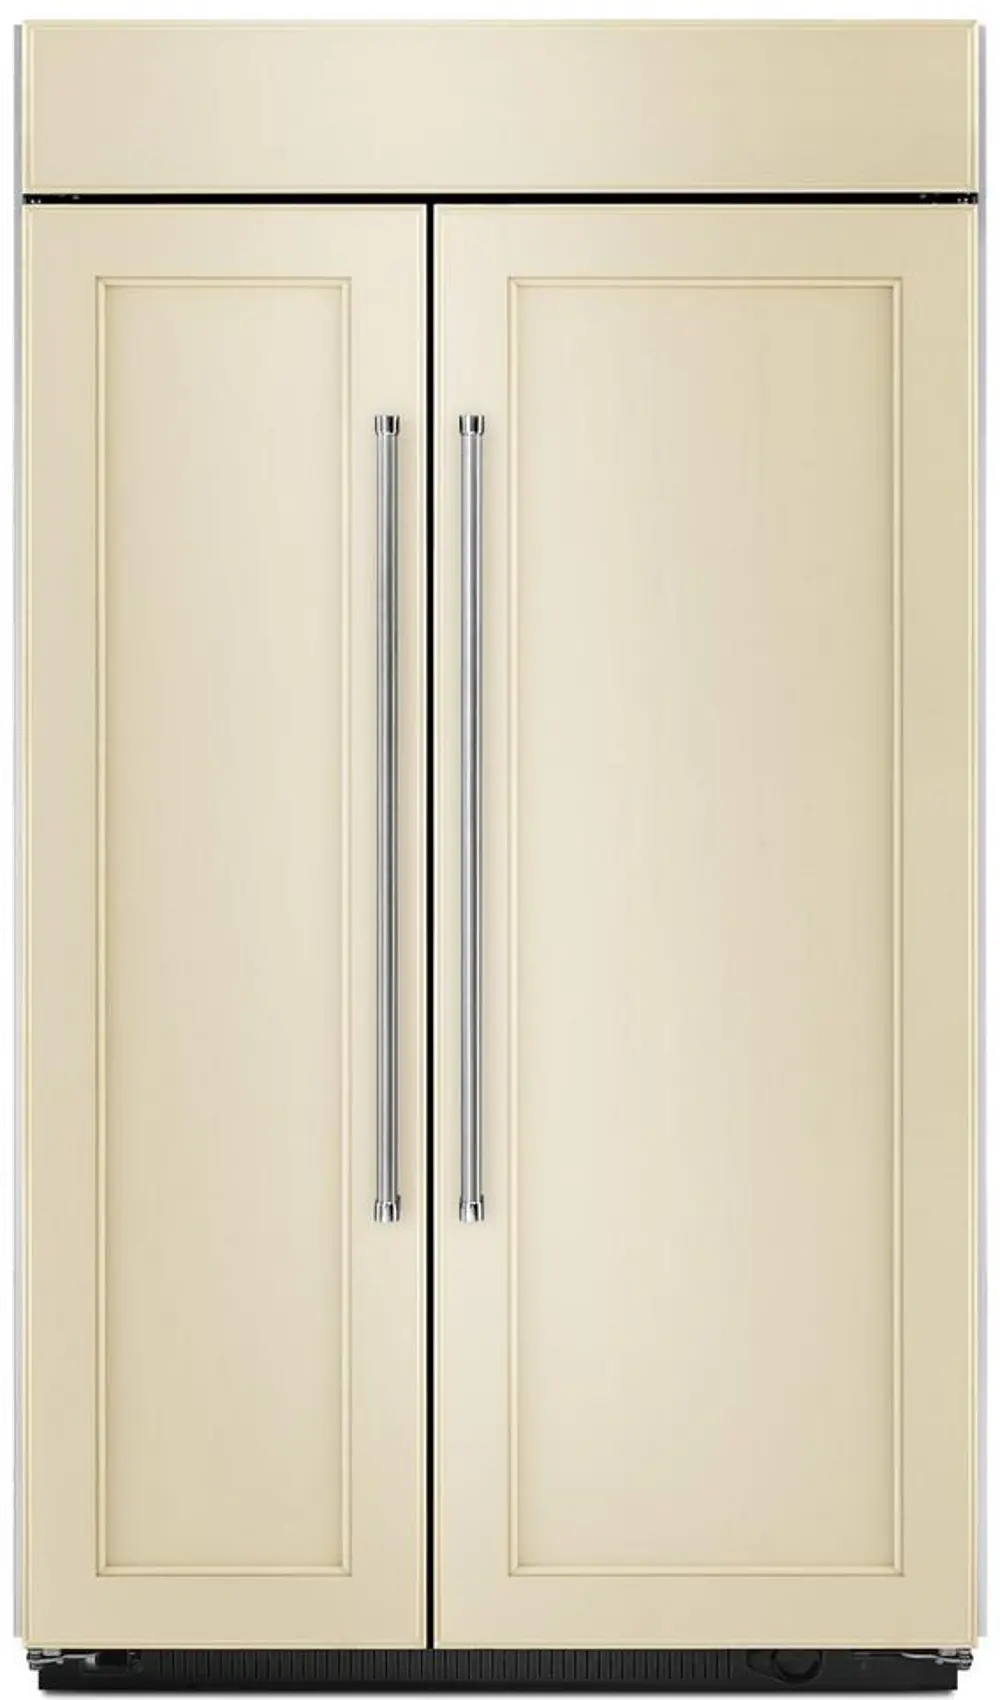 KBSN602EPA KitchenAid Built-In Side by Side Refrigerator - 42 Inch Panel Ready-1